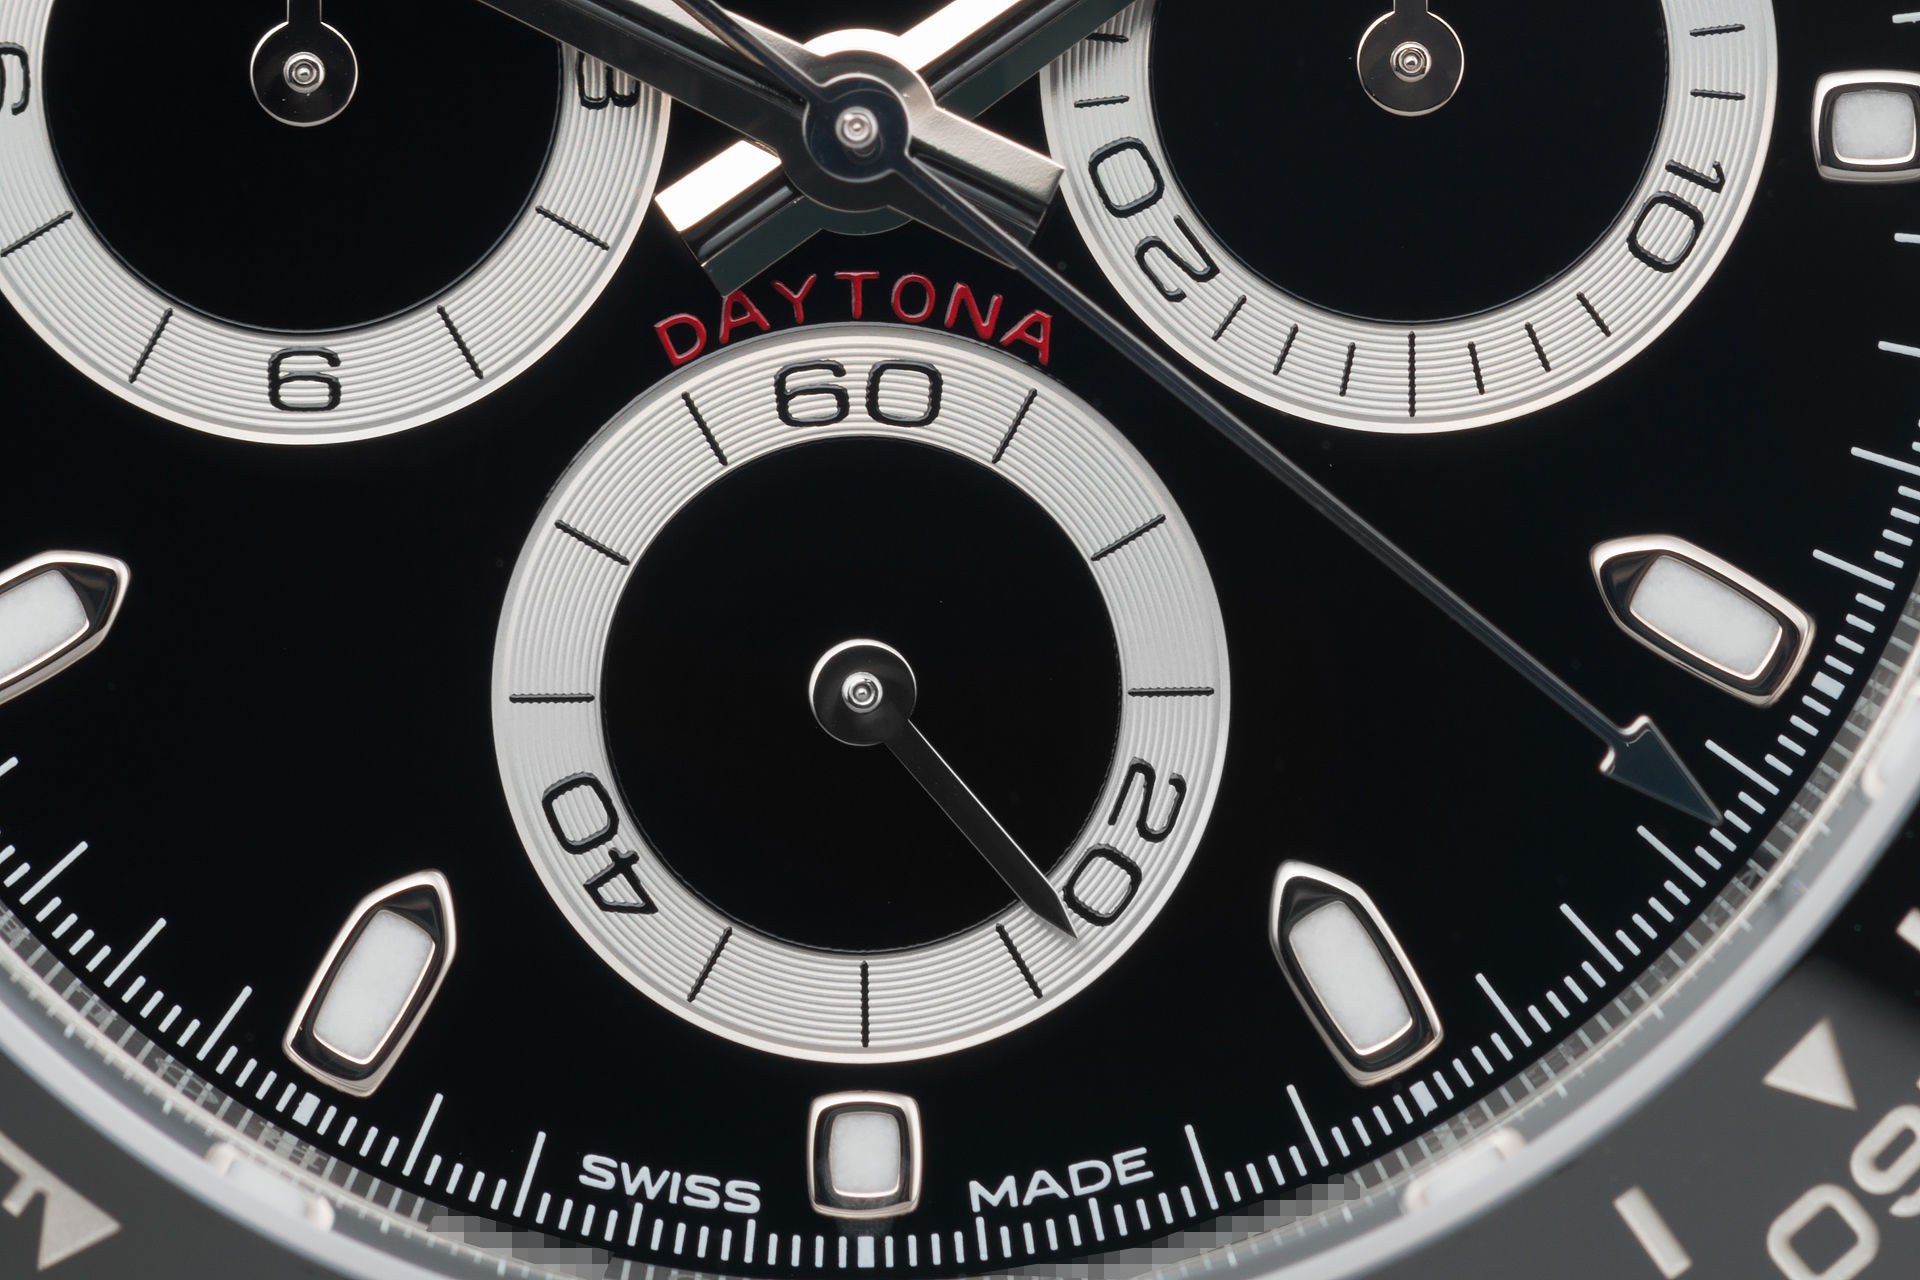 ref 116500LN | 'Brand New' 5 Year Warranty | Rolex Cosmograph Daytona